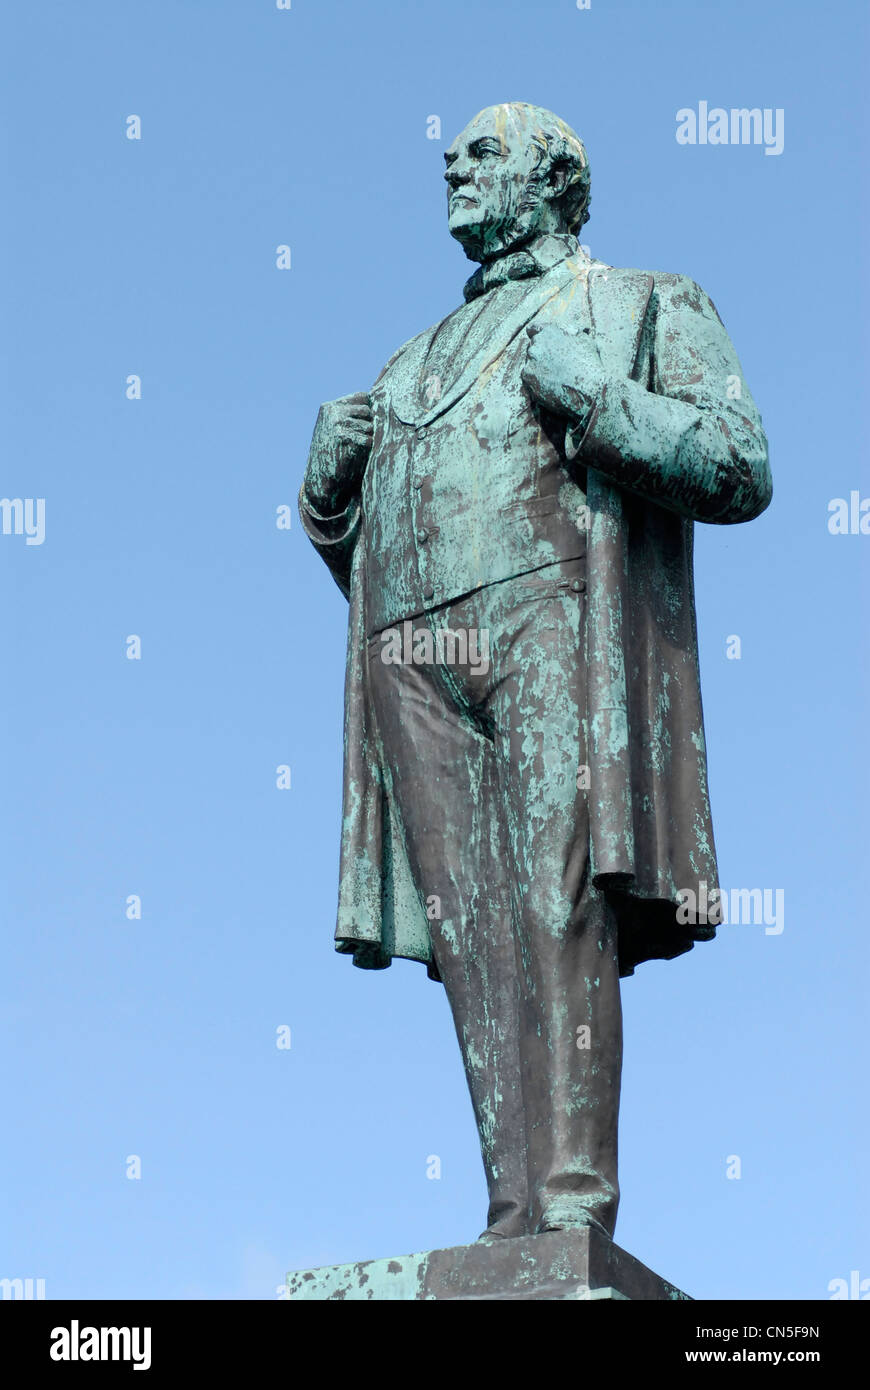 Iceland, Reykjavik, statue of the national hero Jon Sigurdsson in the public garden of Austurvollur, the sculptor Einar JONSSON Stock Photo